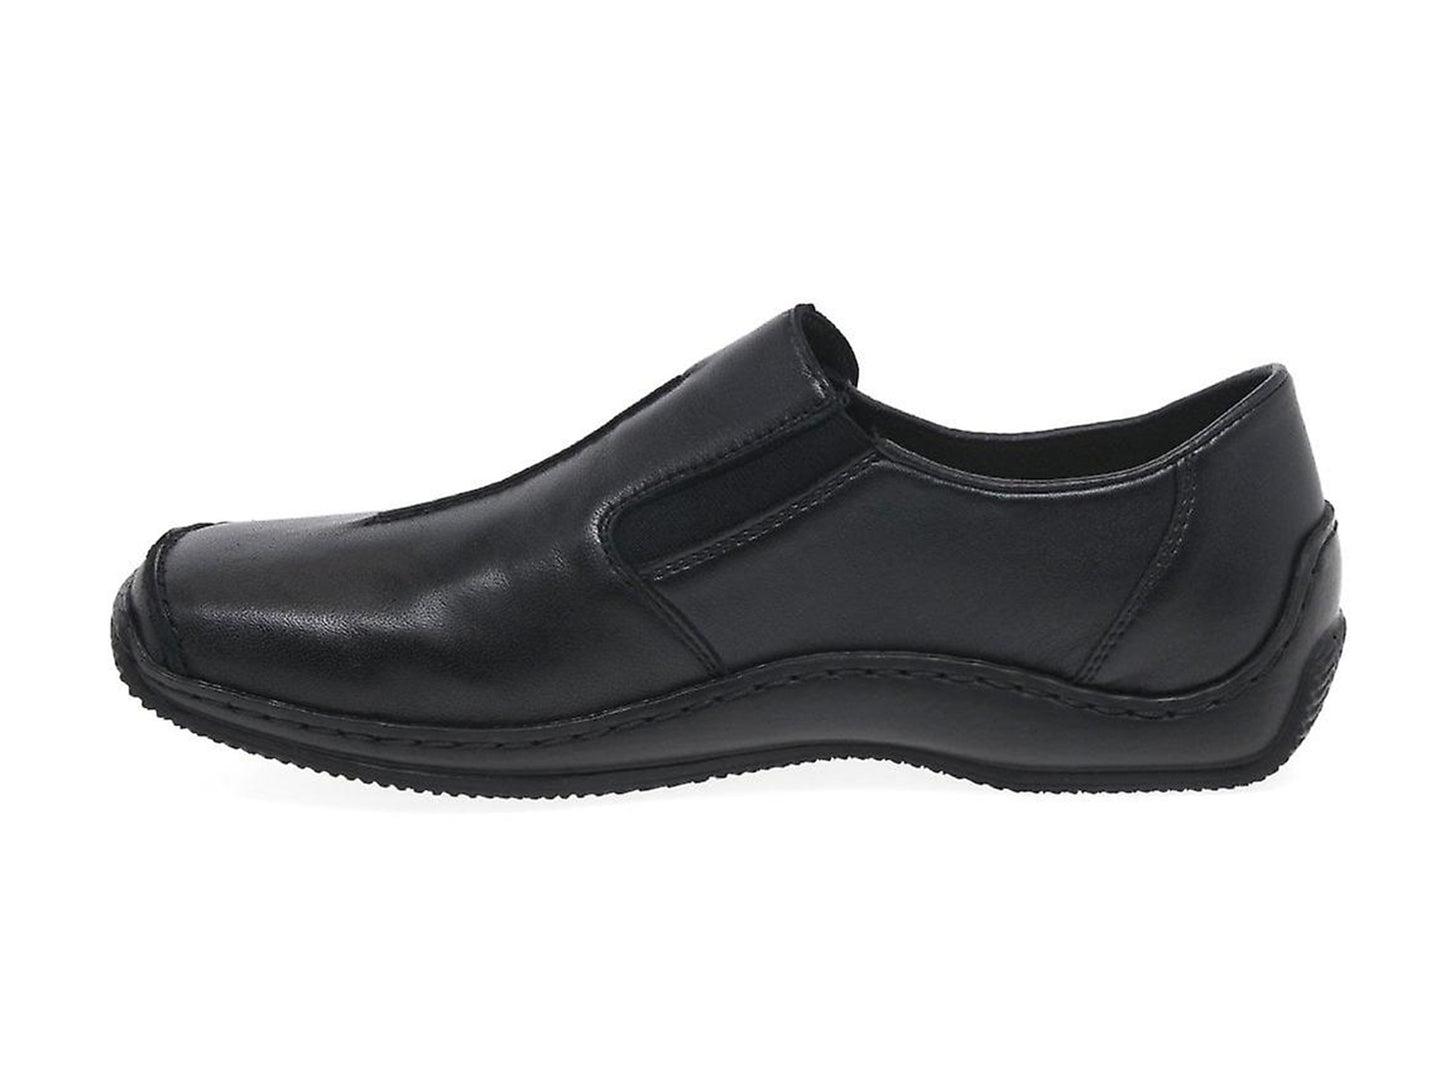 Rieker Celia Ladies Leather Casual Shoe